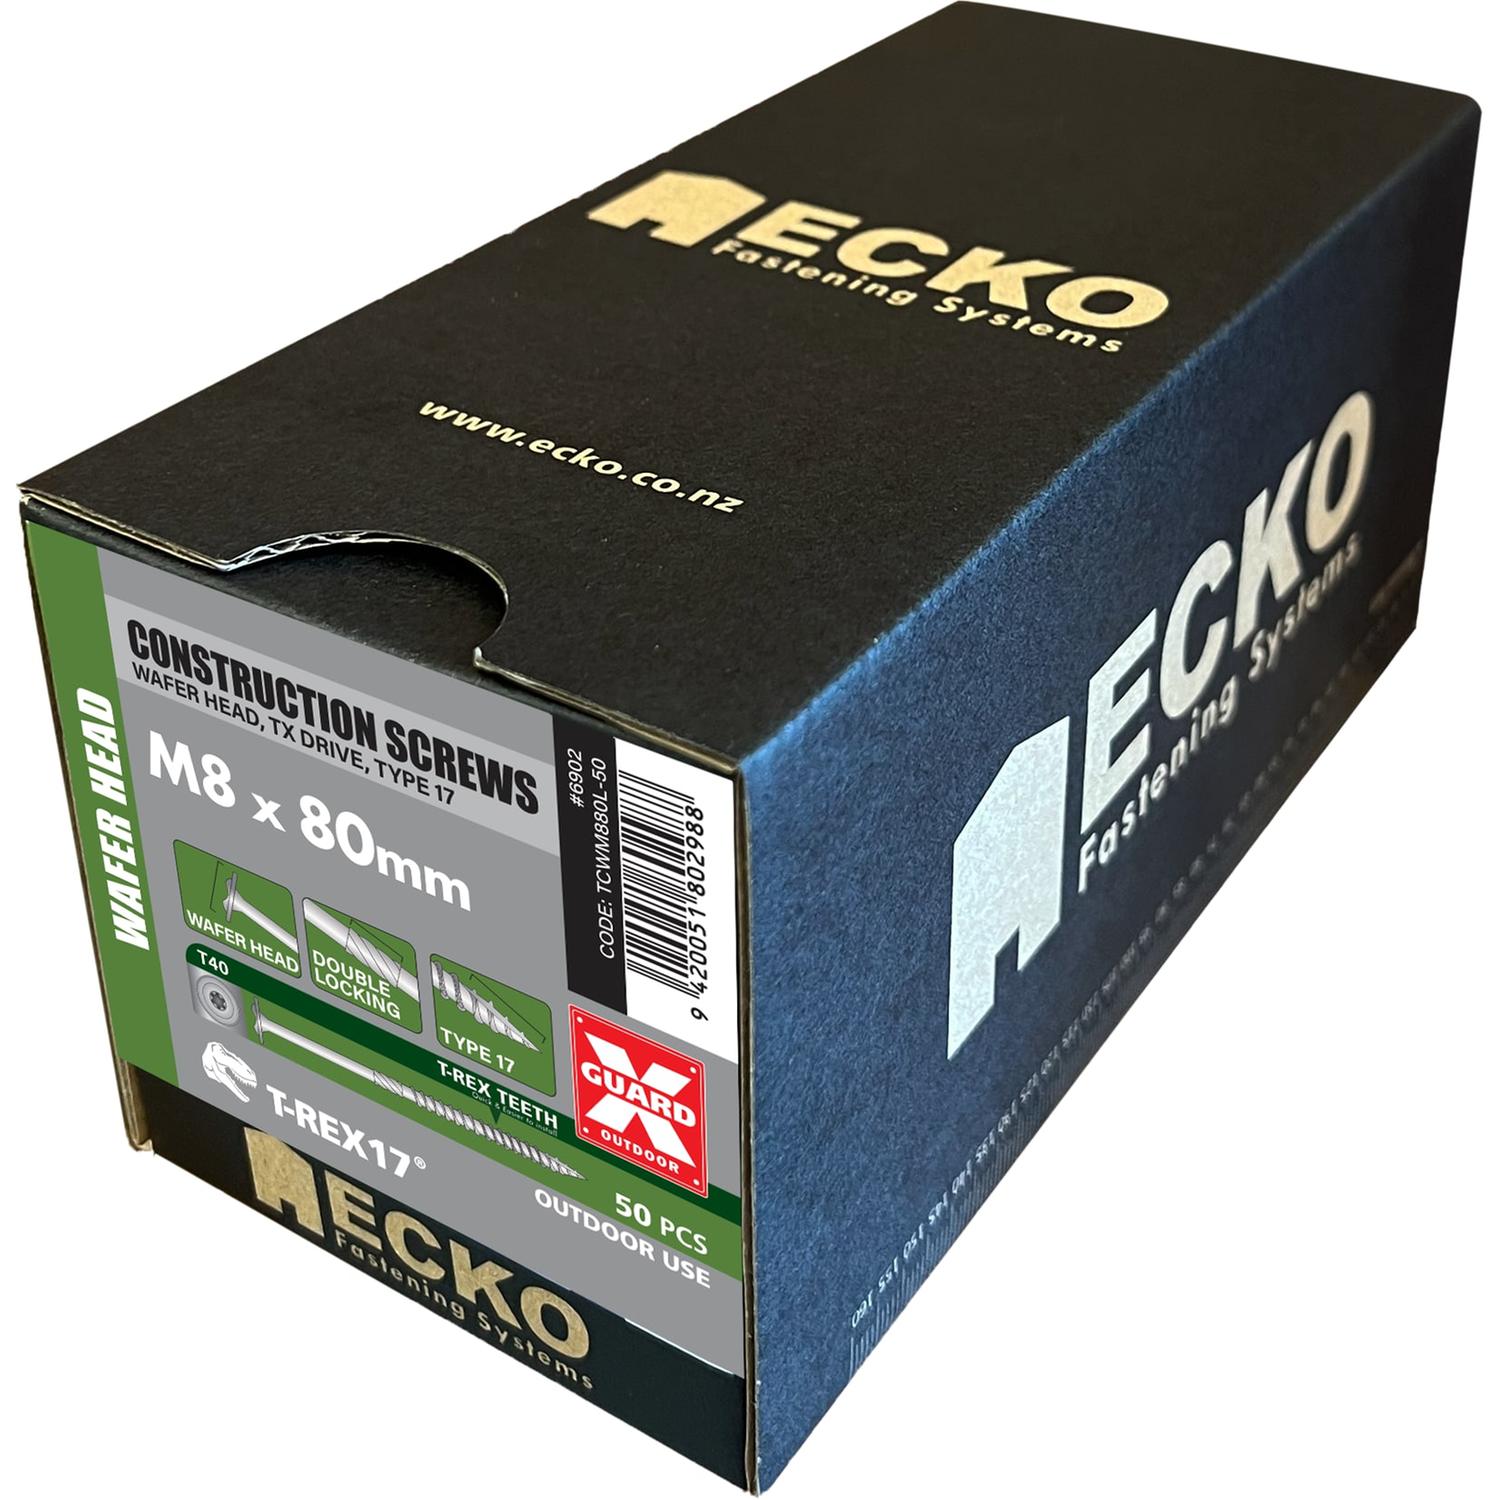 Ecko T-Rex17 Wafer Head Construction Screws M8 X 80Mm (500 Pack)